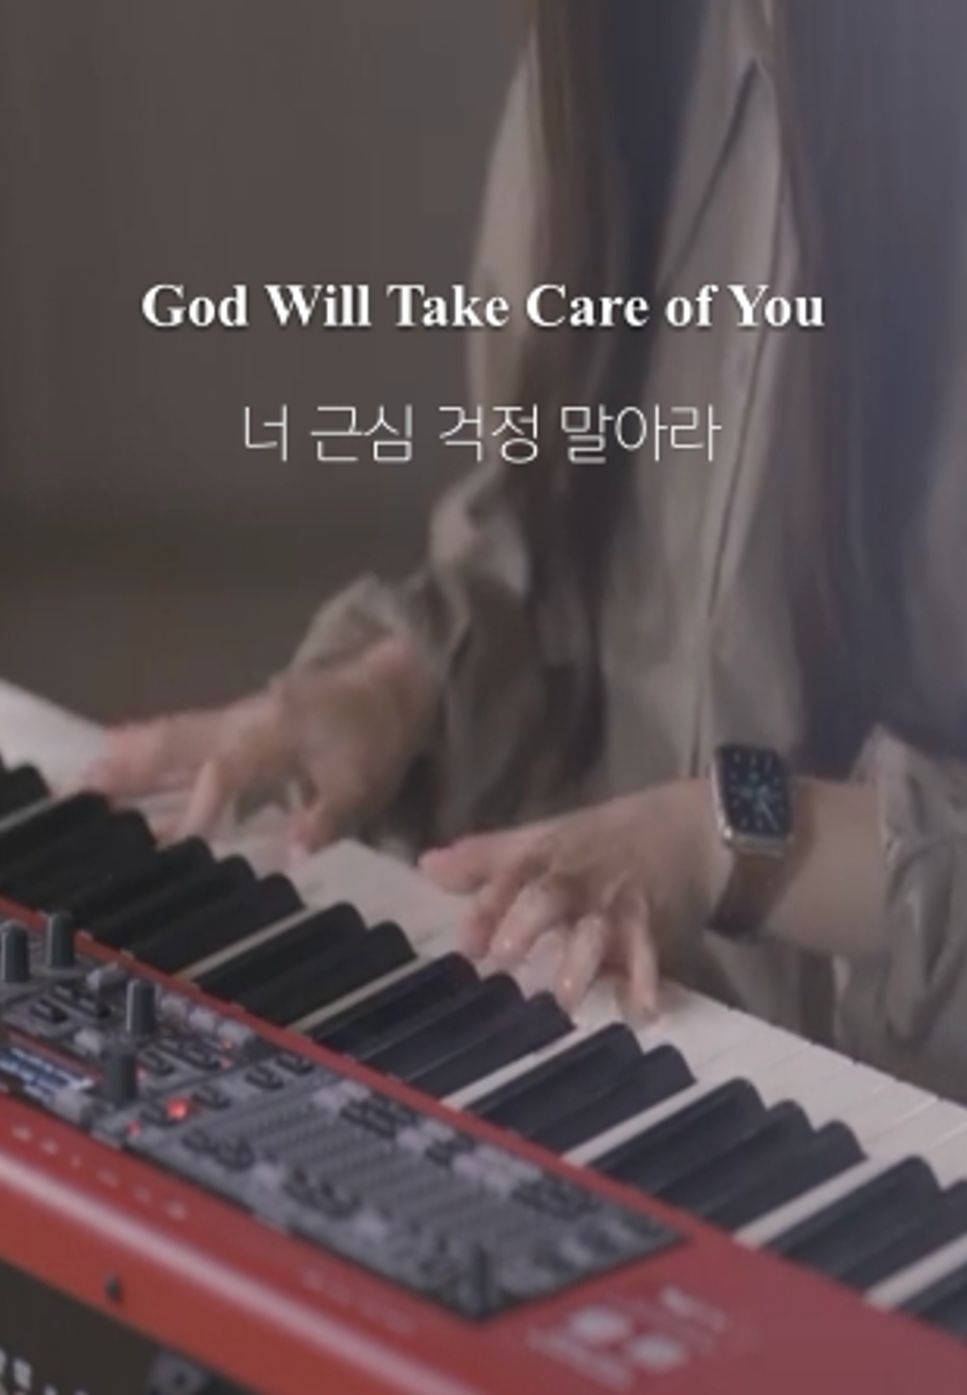 W. S. Martin - 너 근심 걱정 말아라  God Will Take Care of You by Choi Chanmi